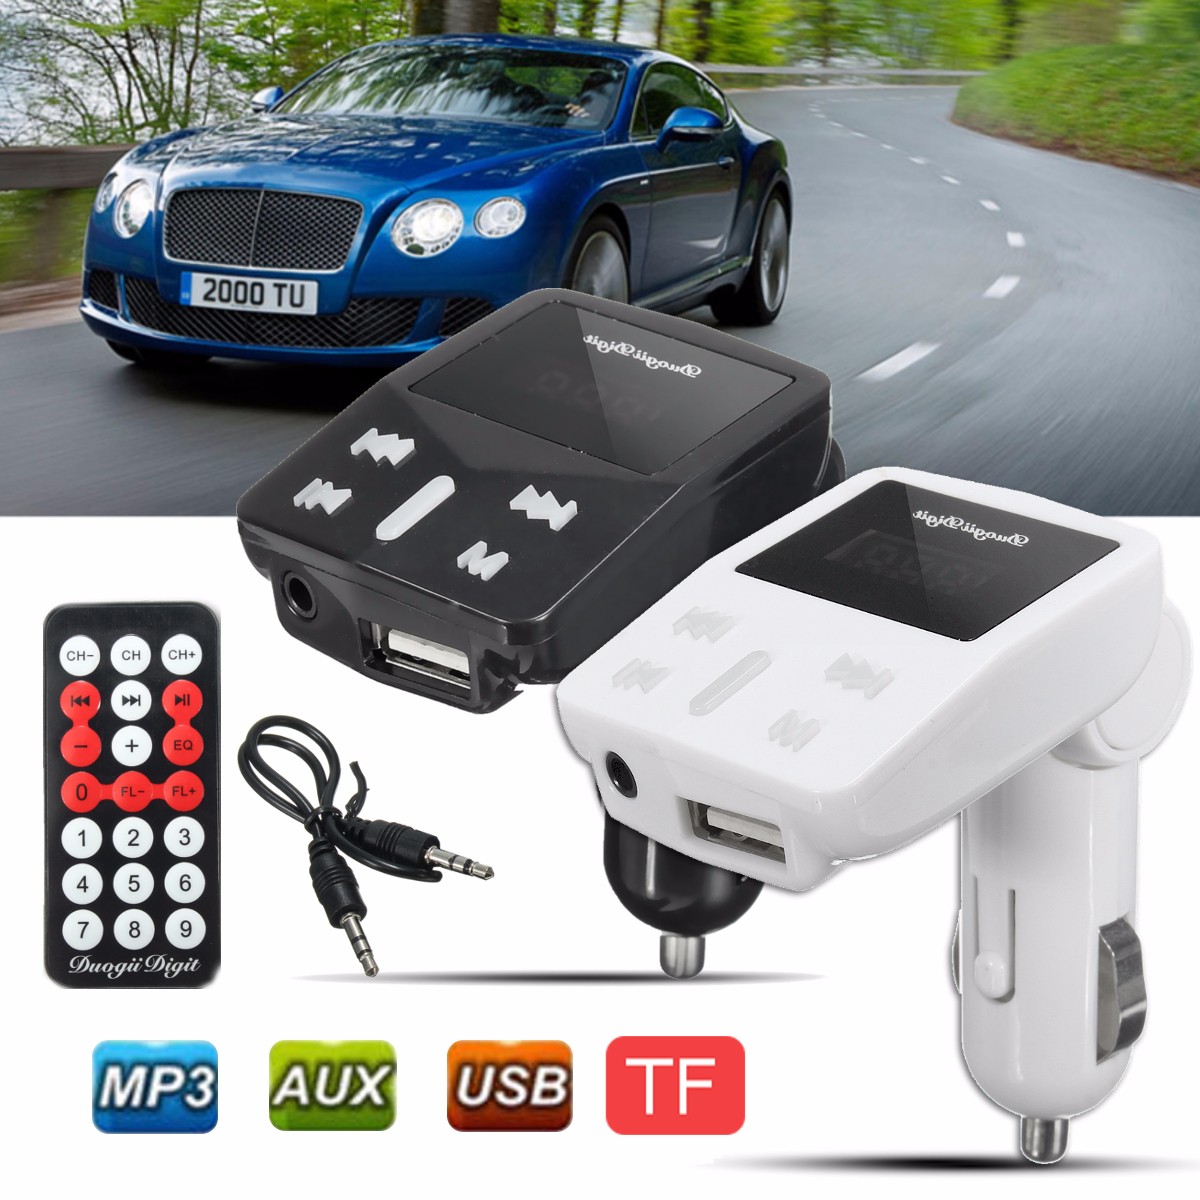 12Prime-LED-Display-Car-Kit-MP3-Player-FM-Transmitter-Modulator-MicroSD-Car-Charger-For-iphoneX-Sams-1235930-3